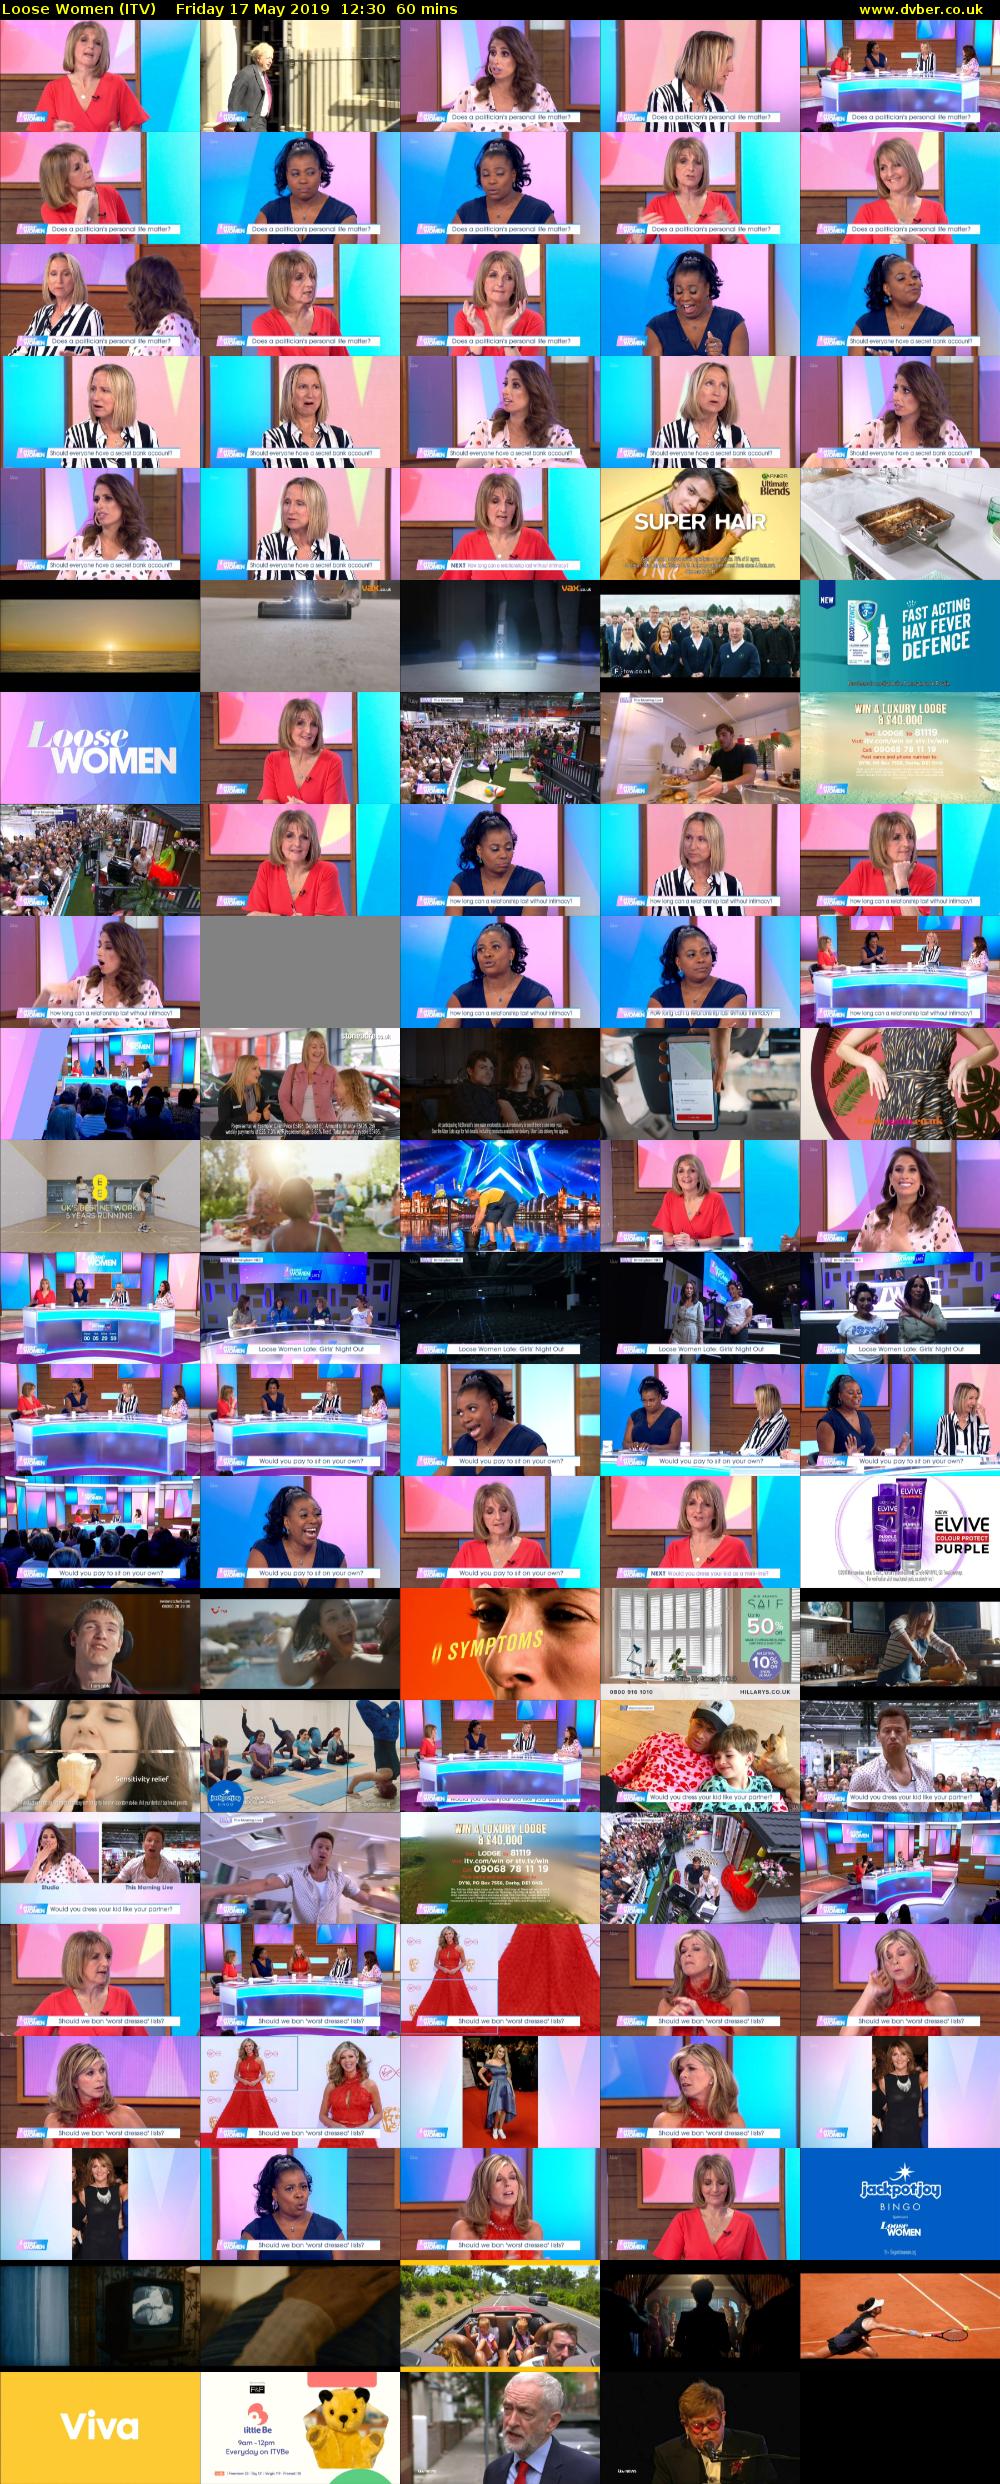 Loose Women (ITV) Friday 17 May 2019 12:30 - 13:30